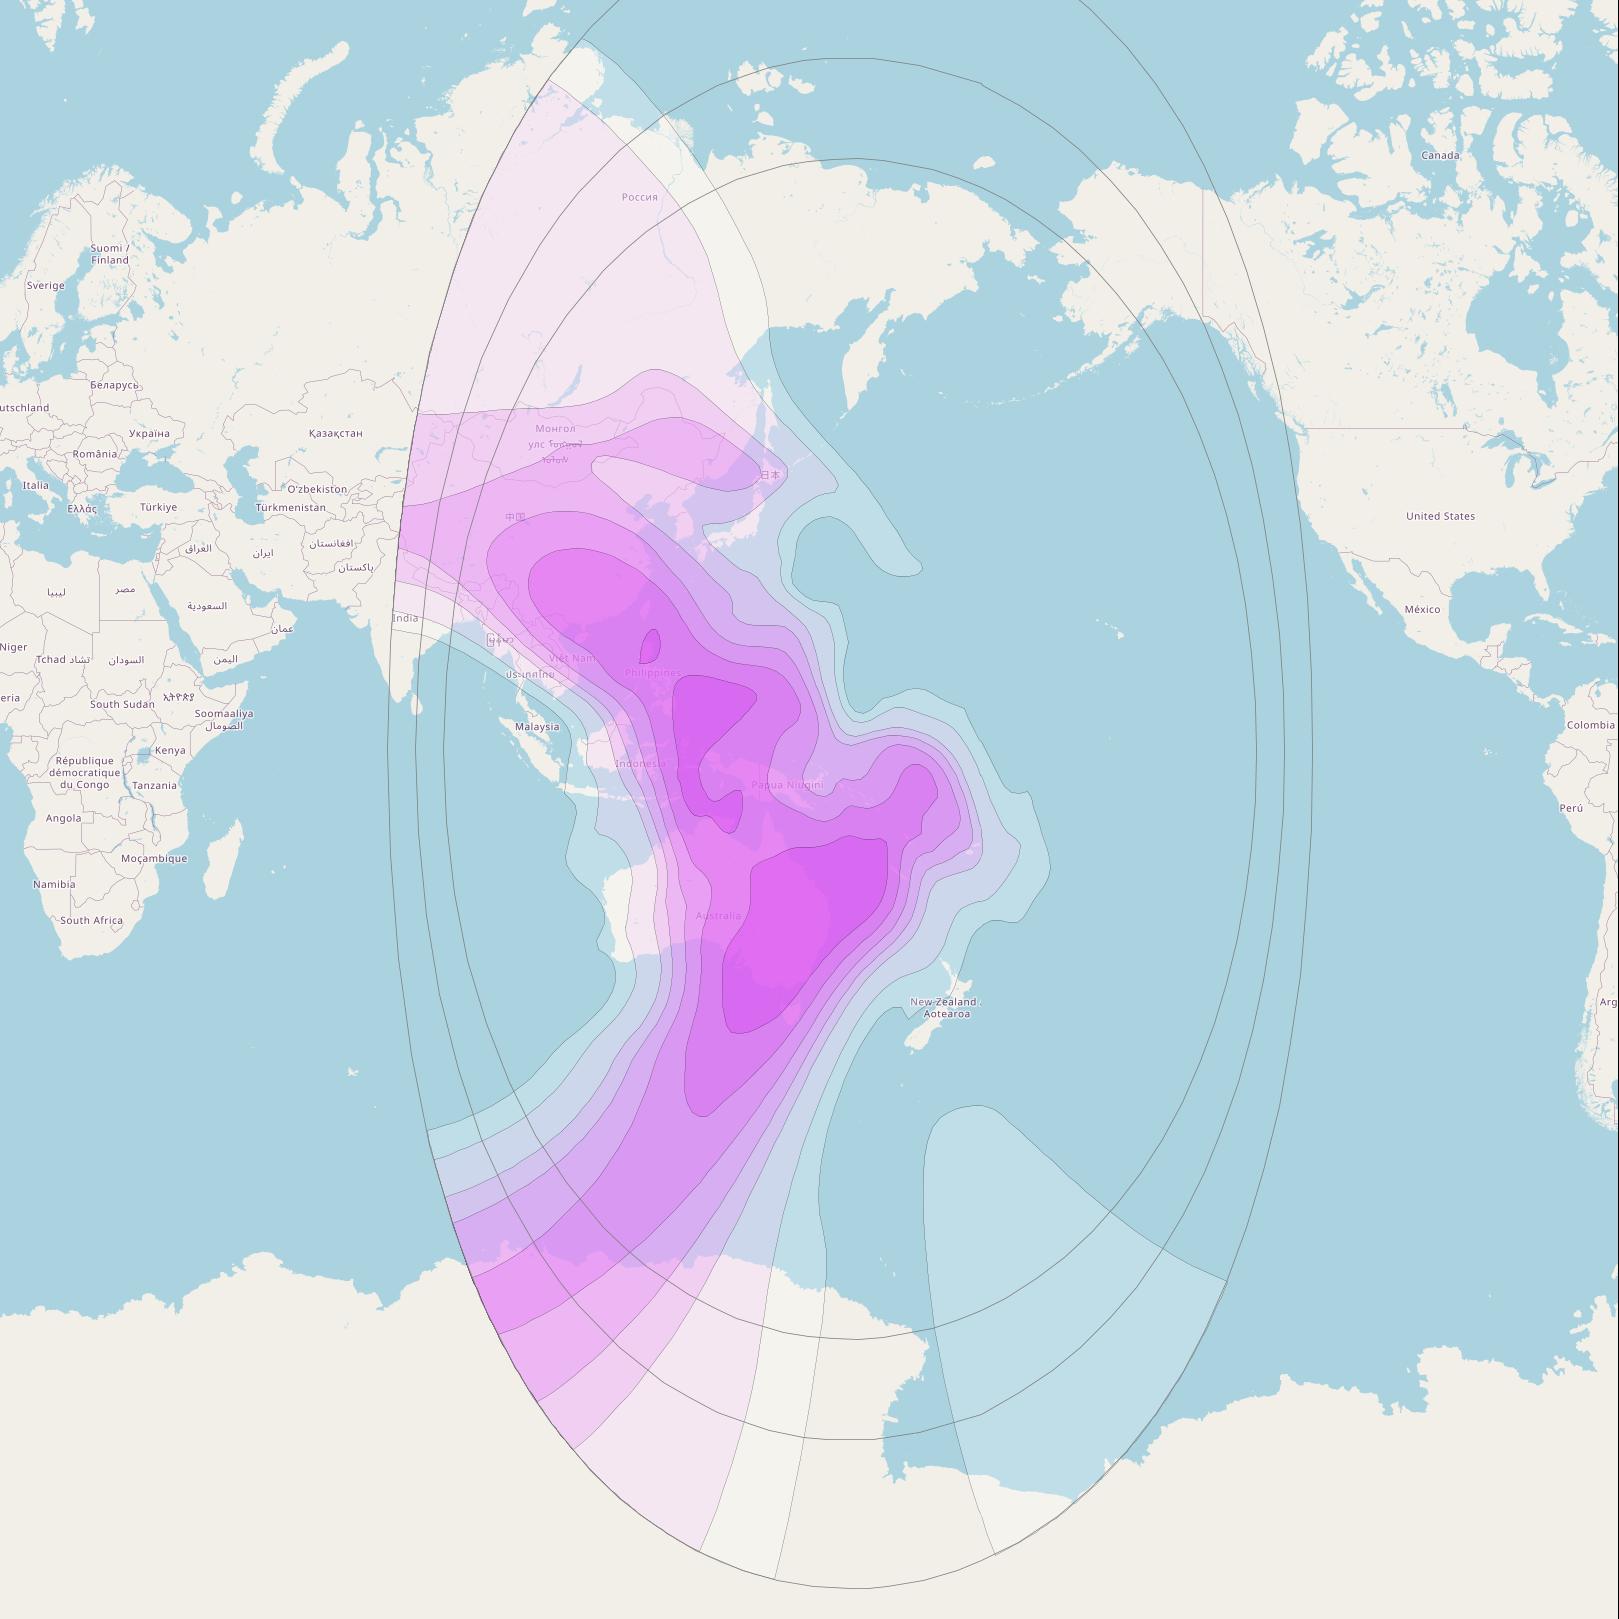 Intelsat 1R at 157° E downlink C-band Asia-Australia H beam coverage map